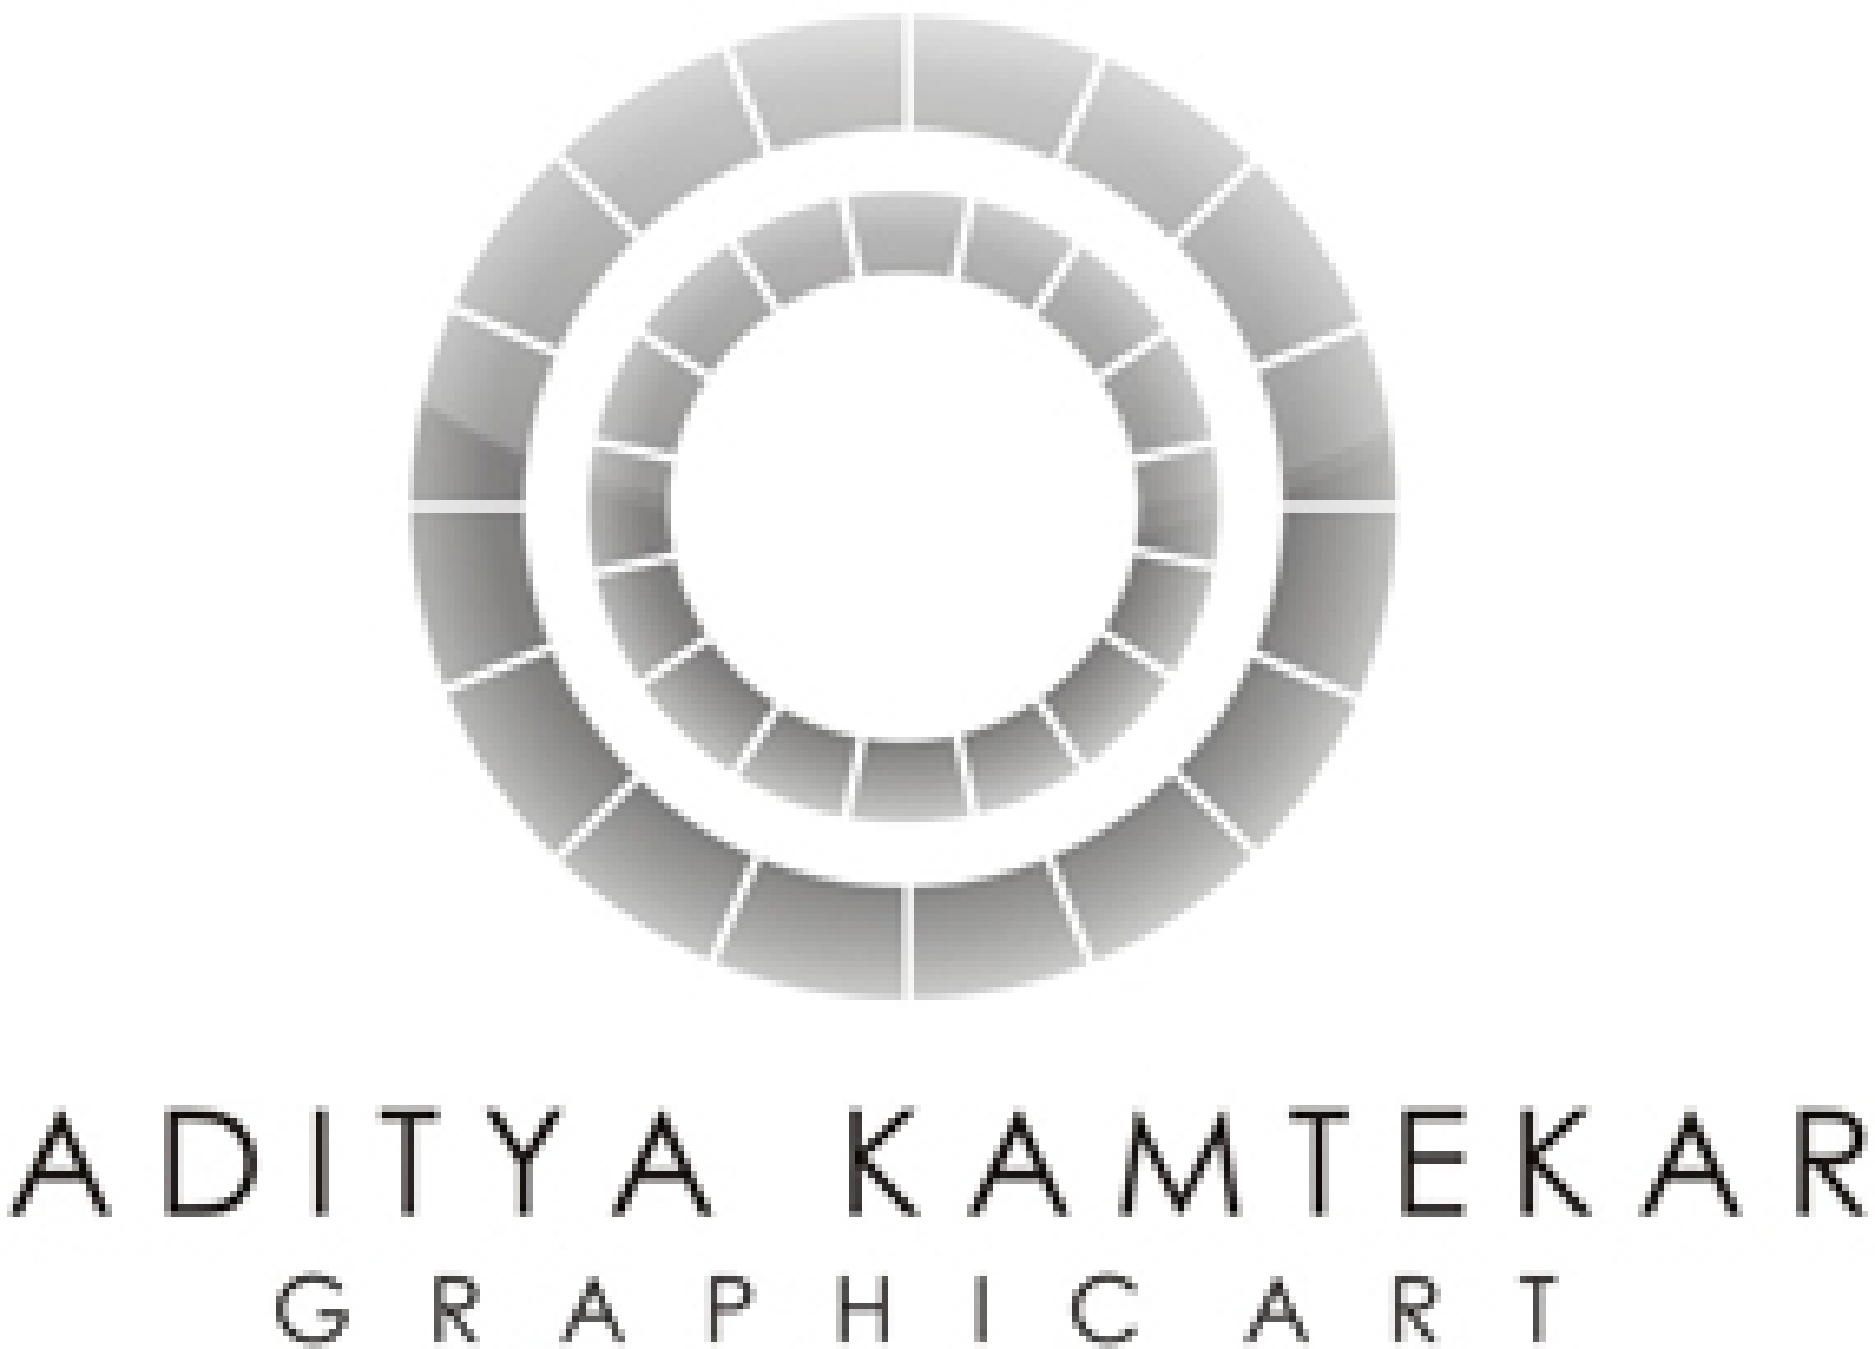 Aditya Kamtekar   Graphic Art Logo Vector